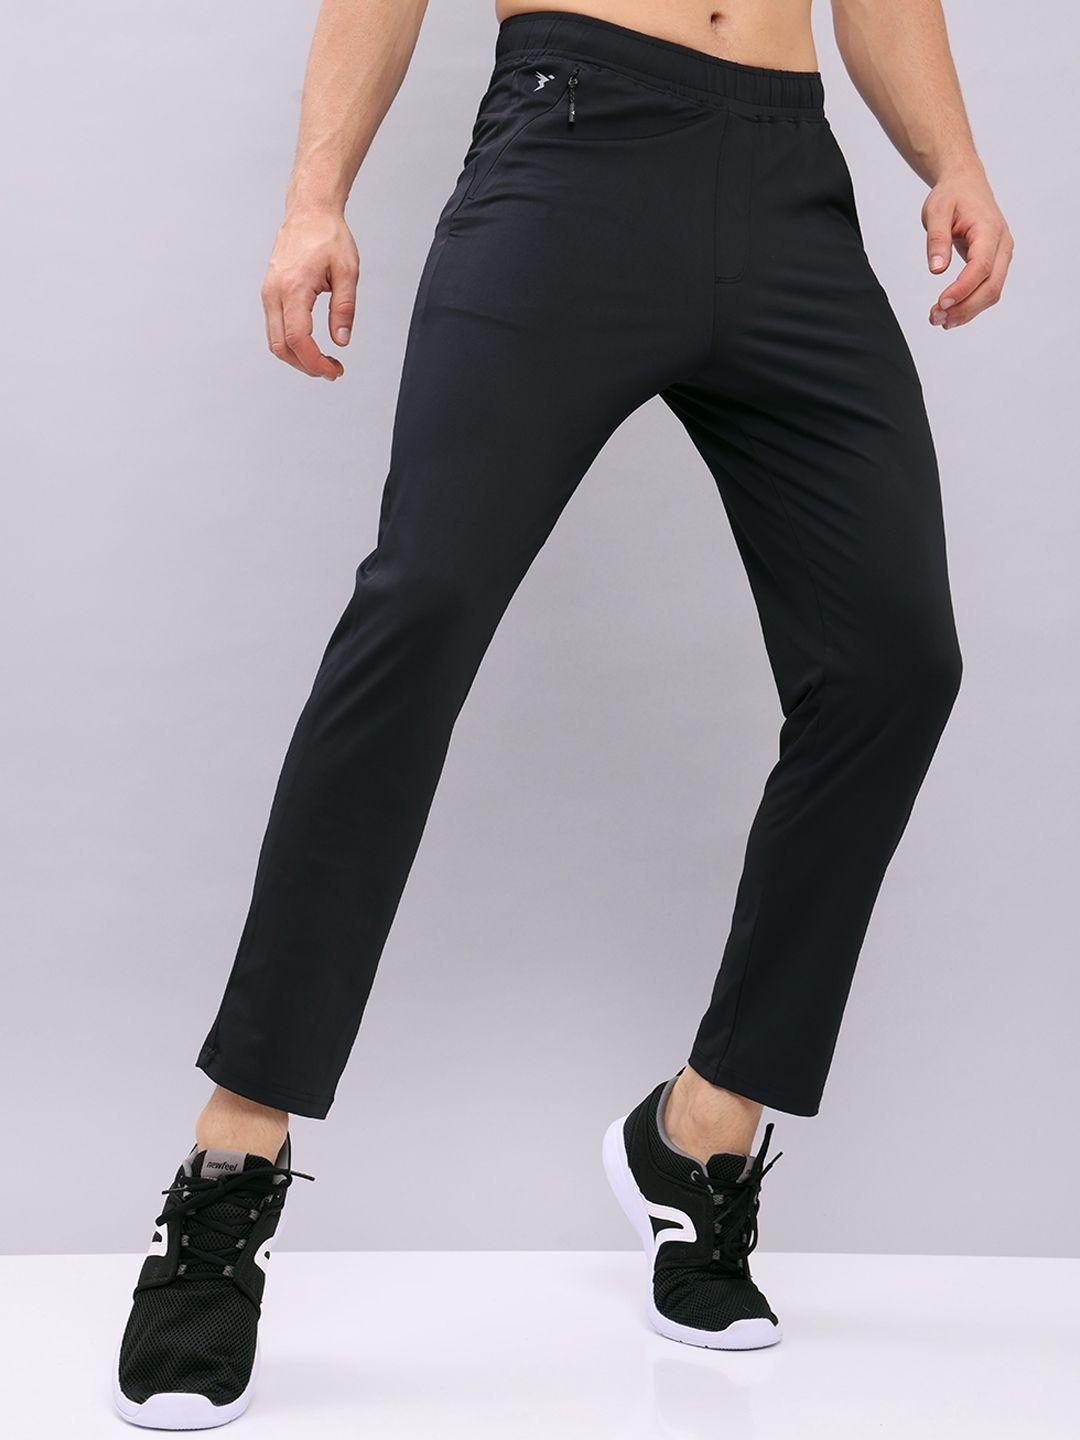 technosport-men-slim-fit-track-pants